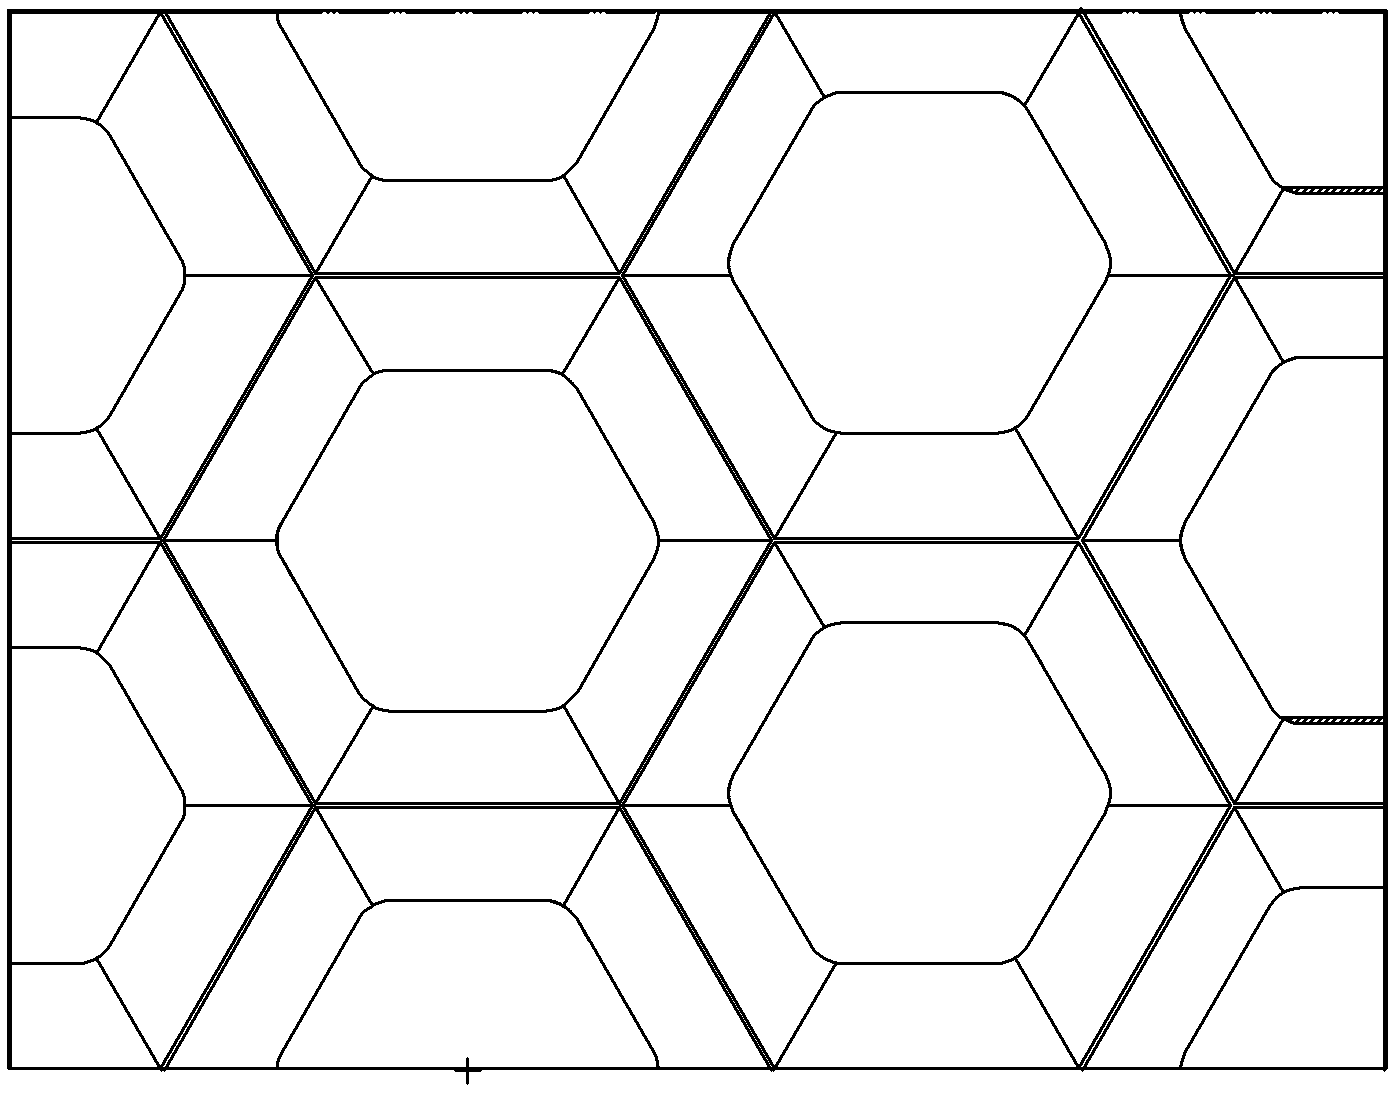 Hexagonal unit body